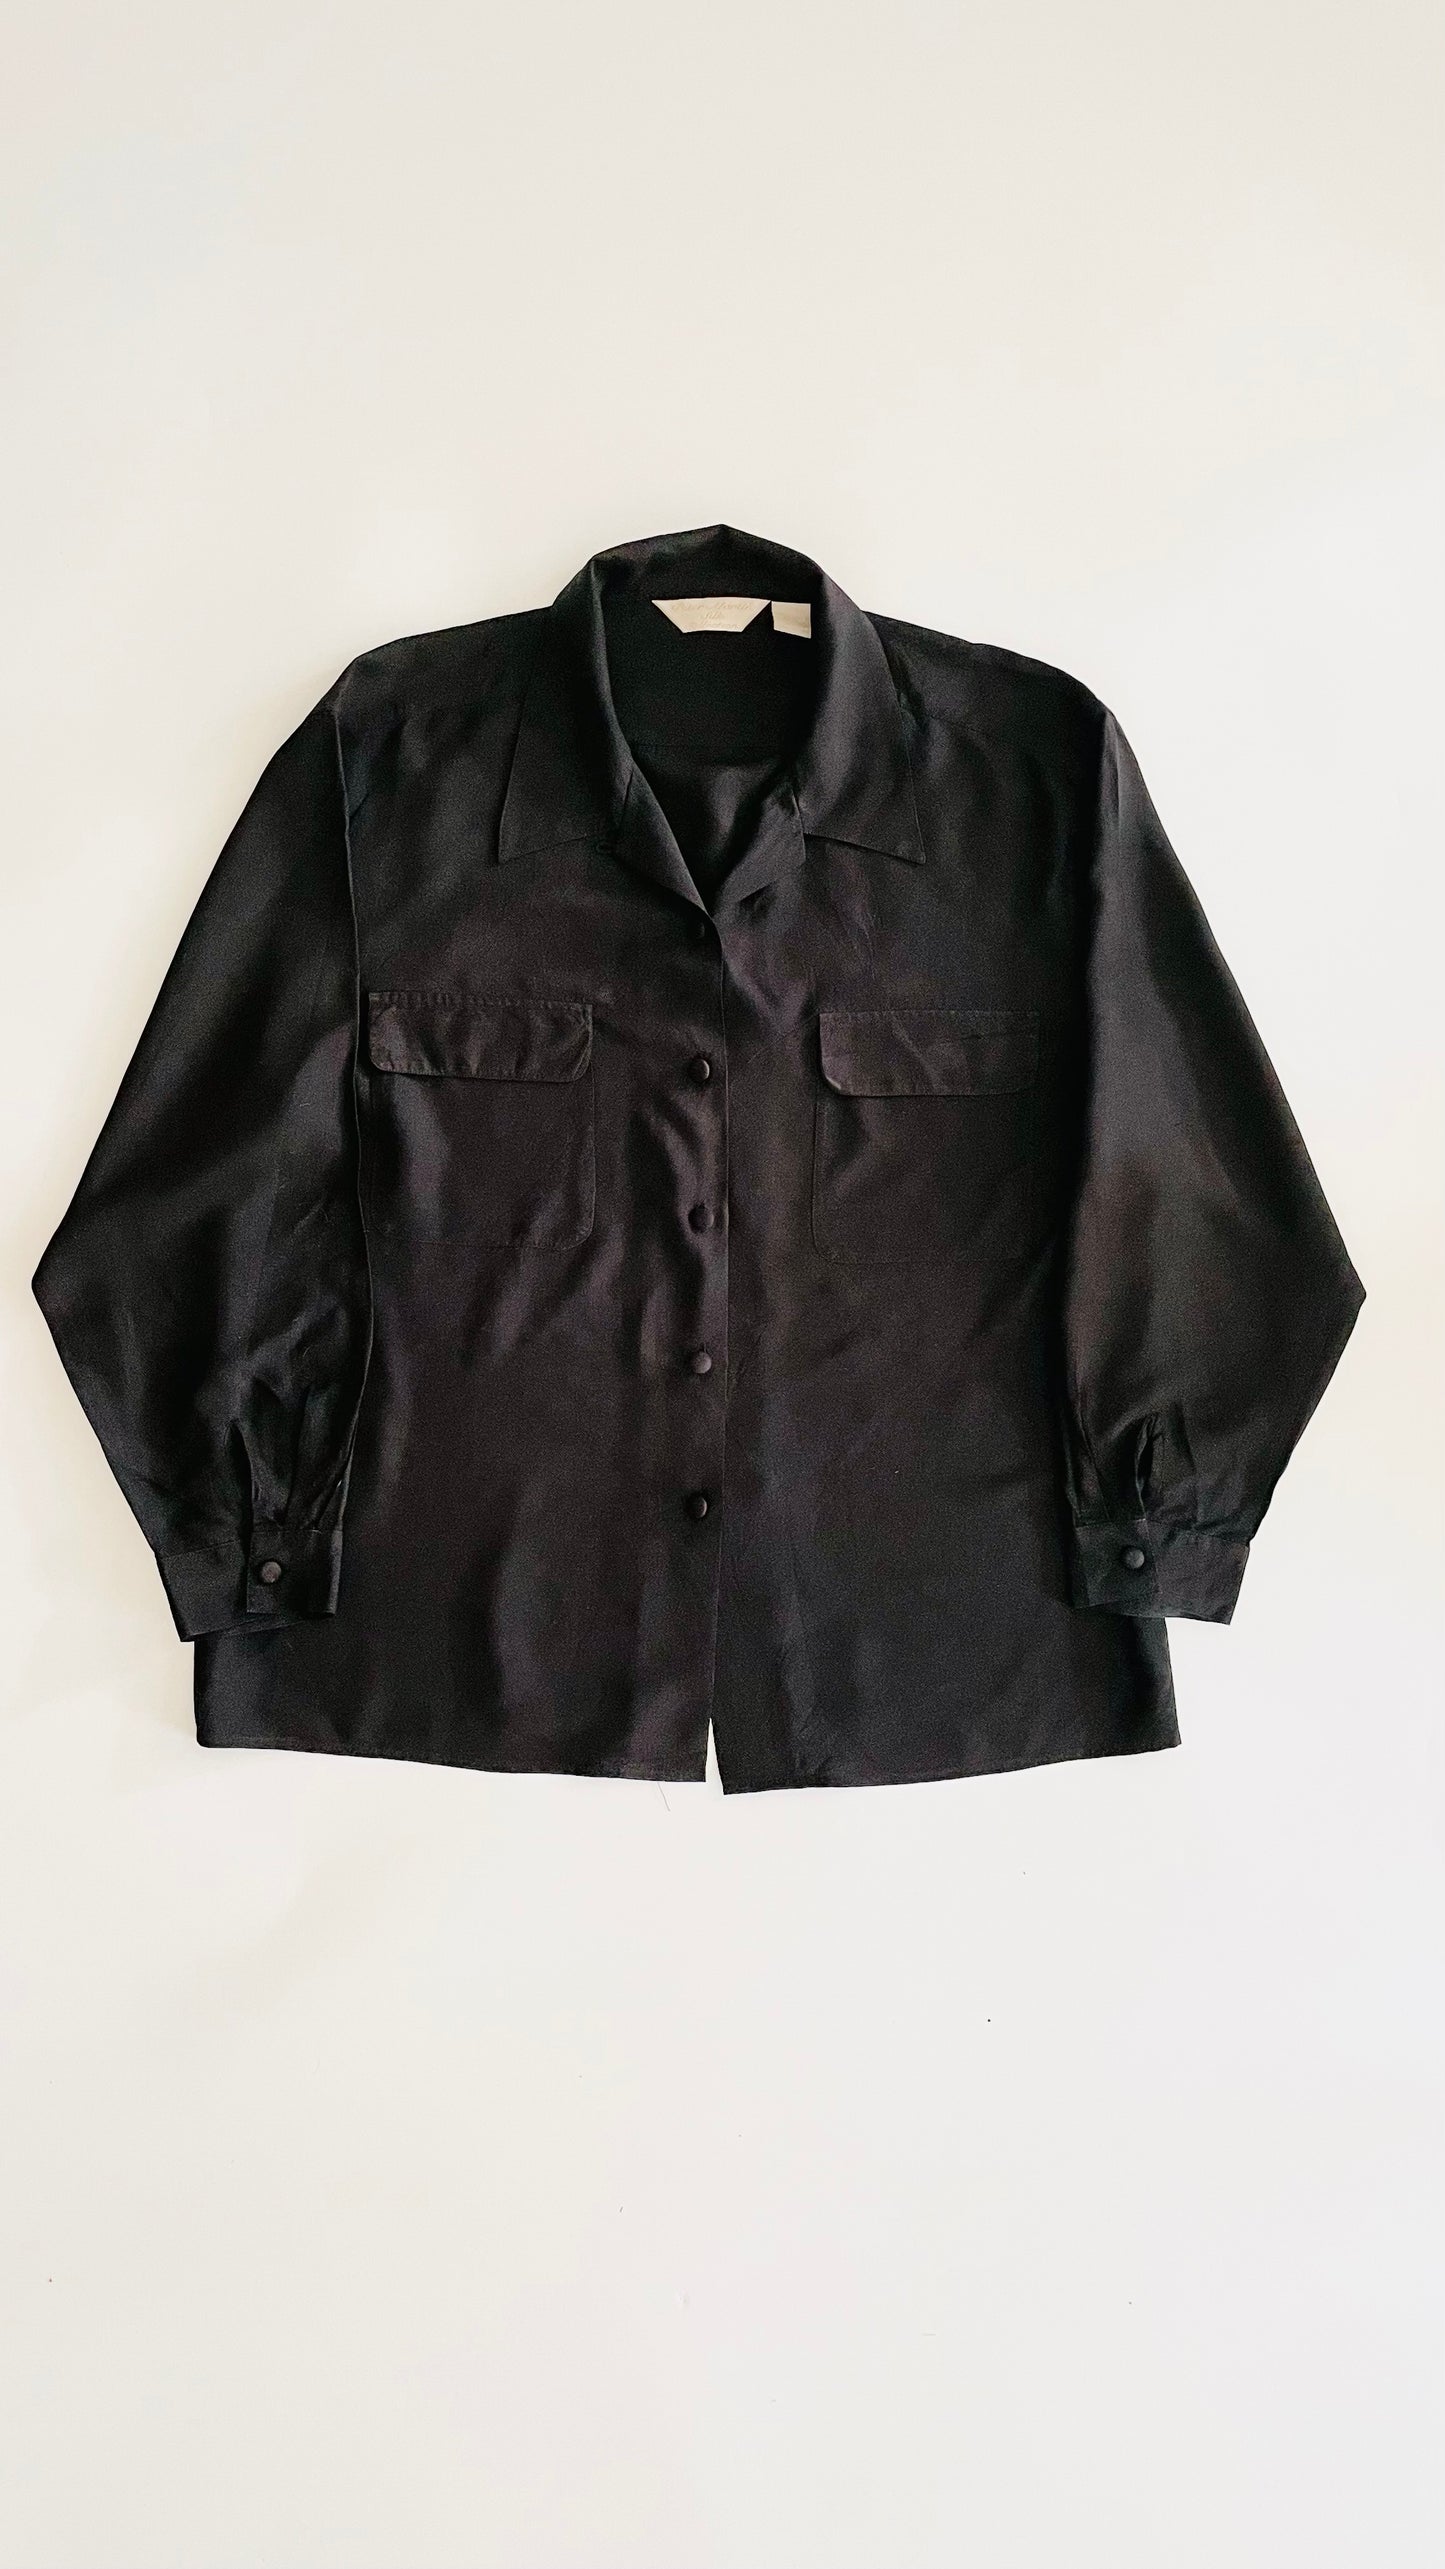 Vintage 90s black silk button up shirt - Size XL